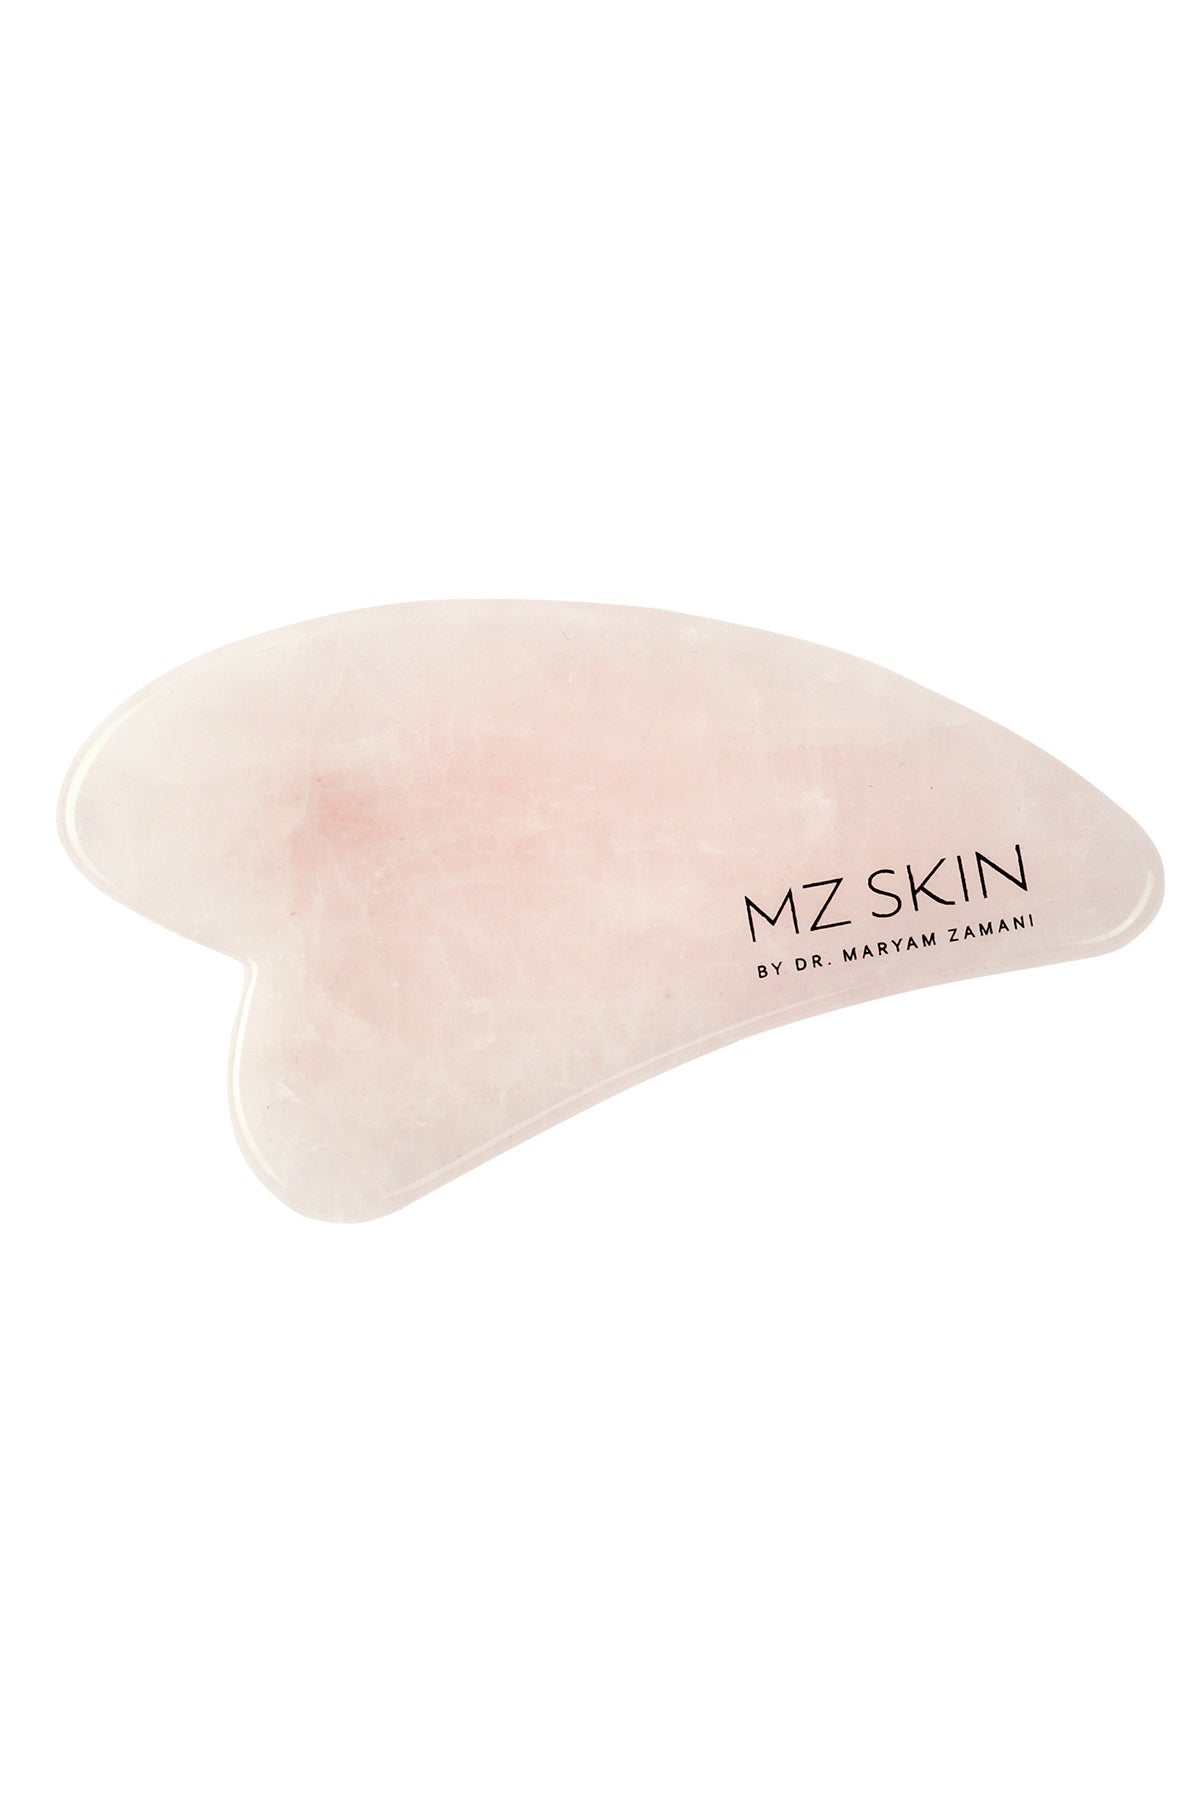 Mz Skin Instant Radiance Facial Kit